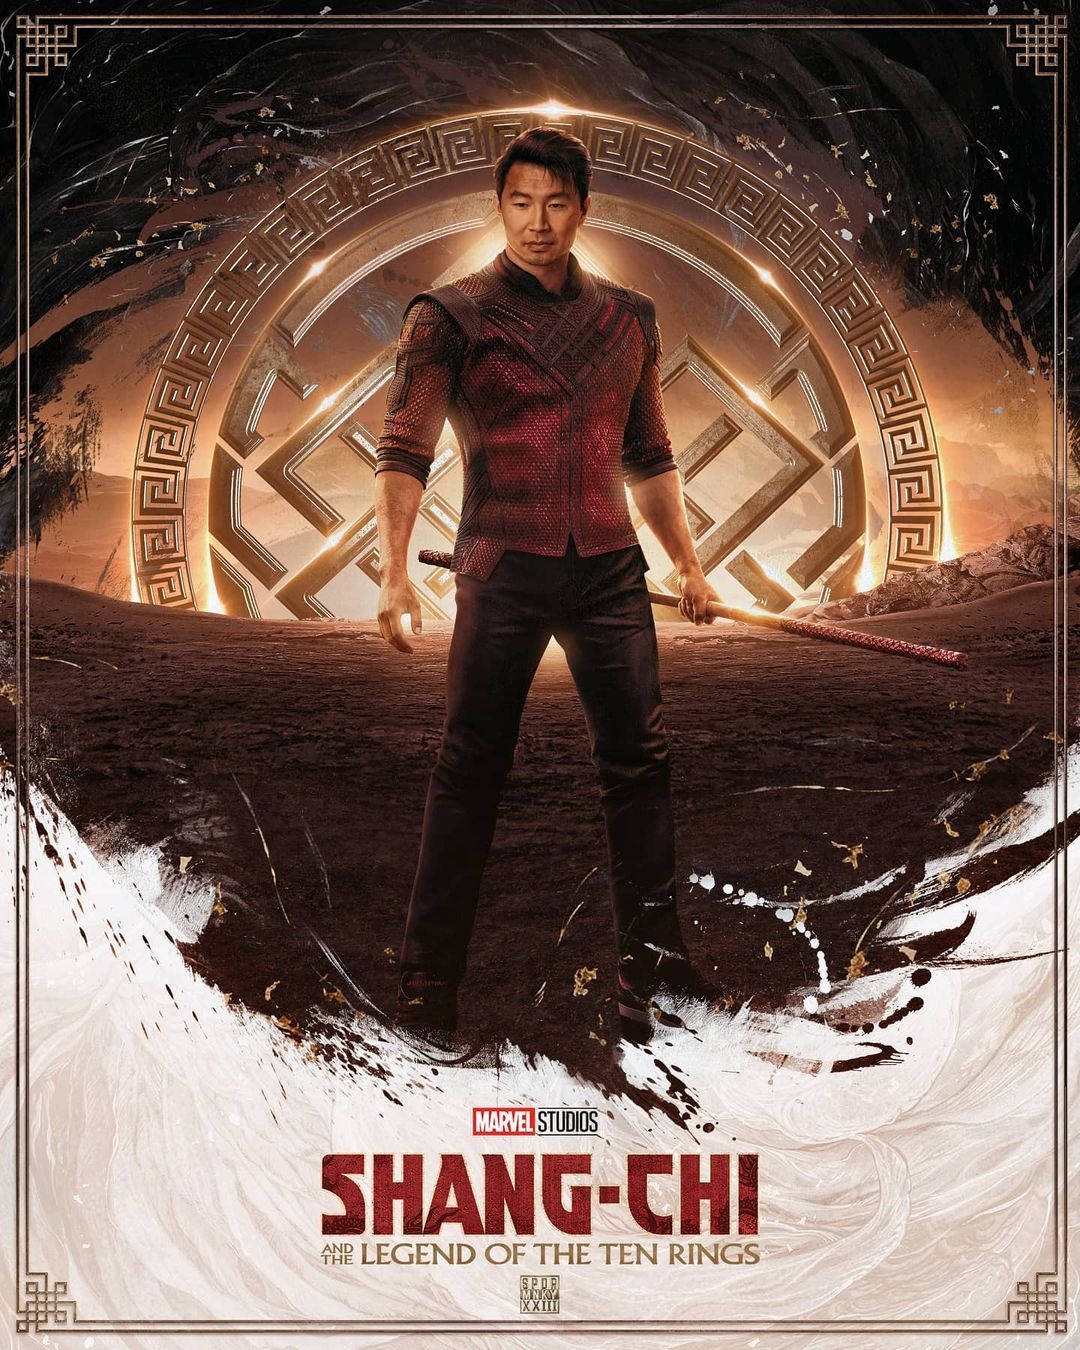 Shang-chi Solo Poster Art Wallpaper